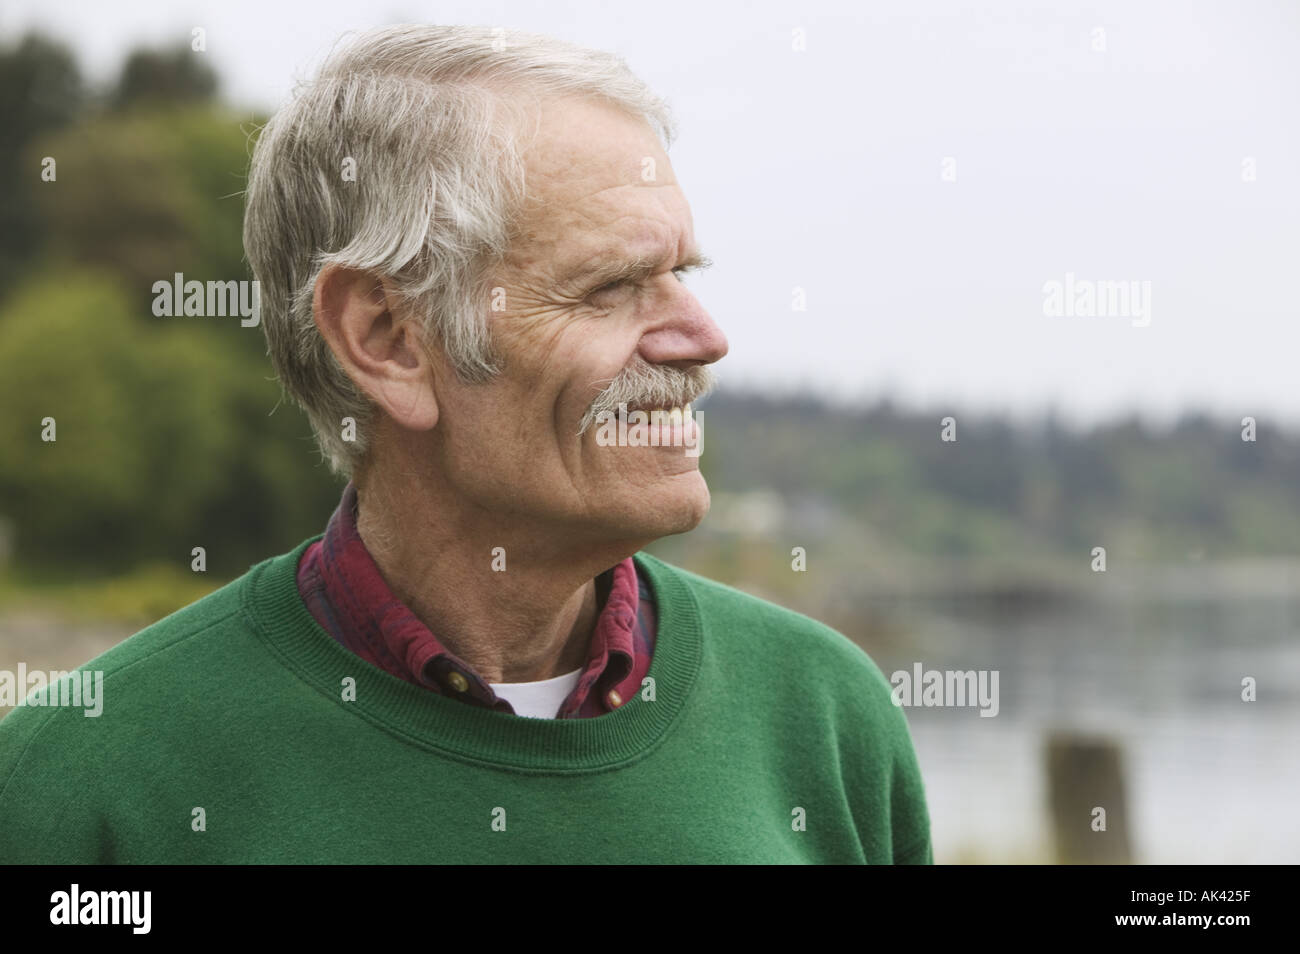 Portrait of a senior man outdoors Stock Photo